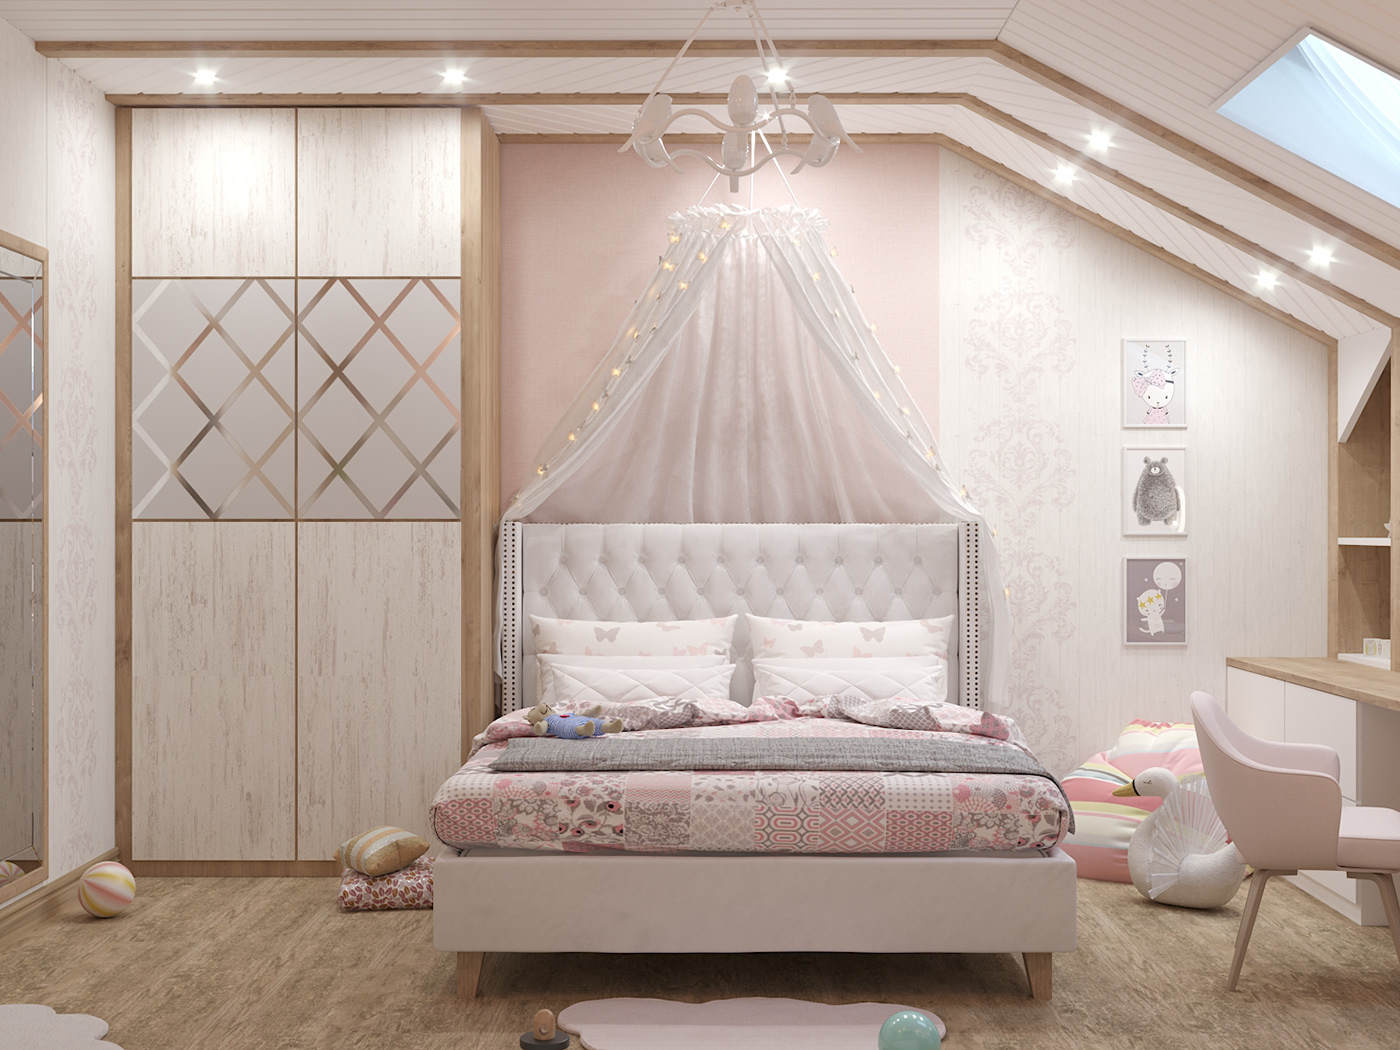 Interior childroom girl pink интерьер детская комната розовая детская